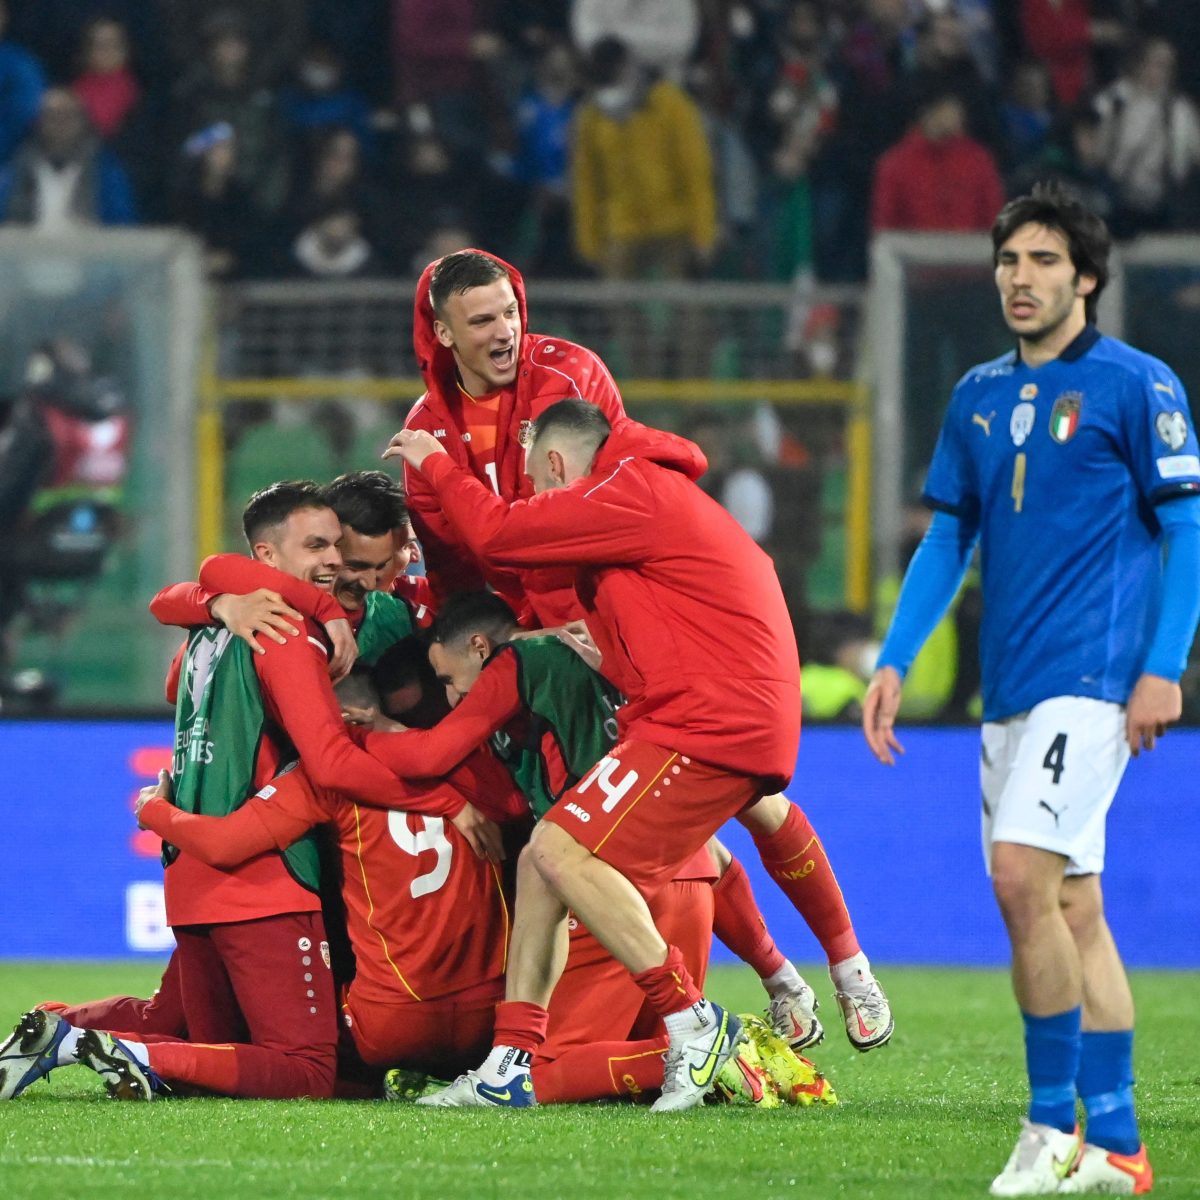 batacazo mundial un gol en el ultimo minuto saco a italia de qatar 2022 laverdaddemonagas.com fopcluixoaoacw